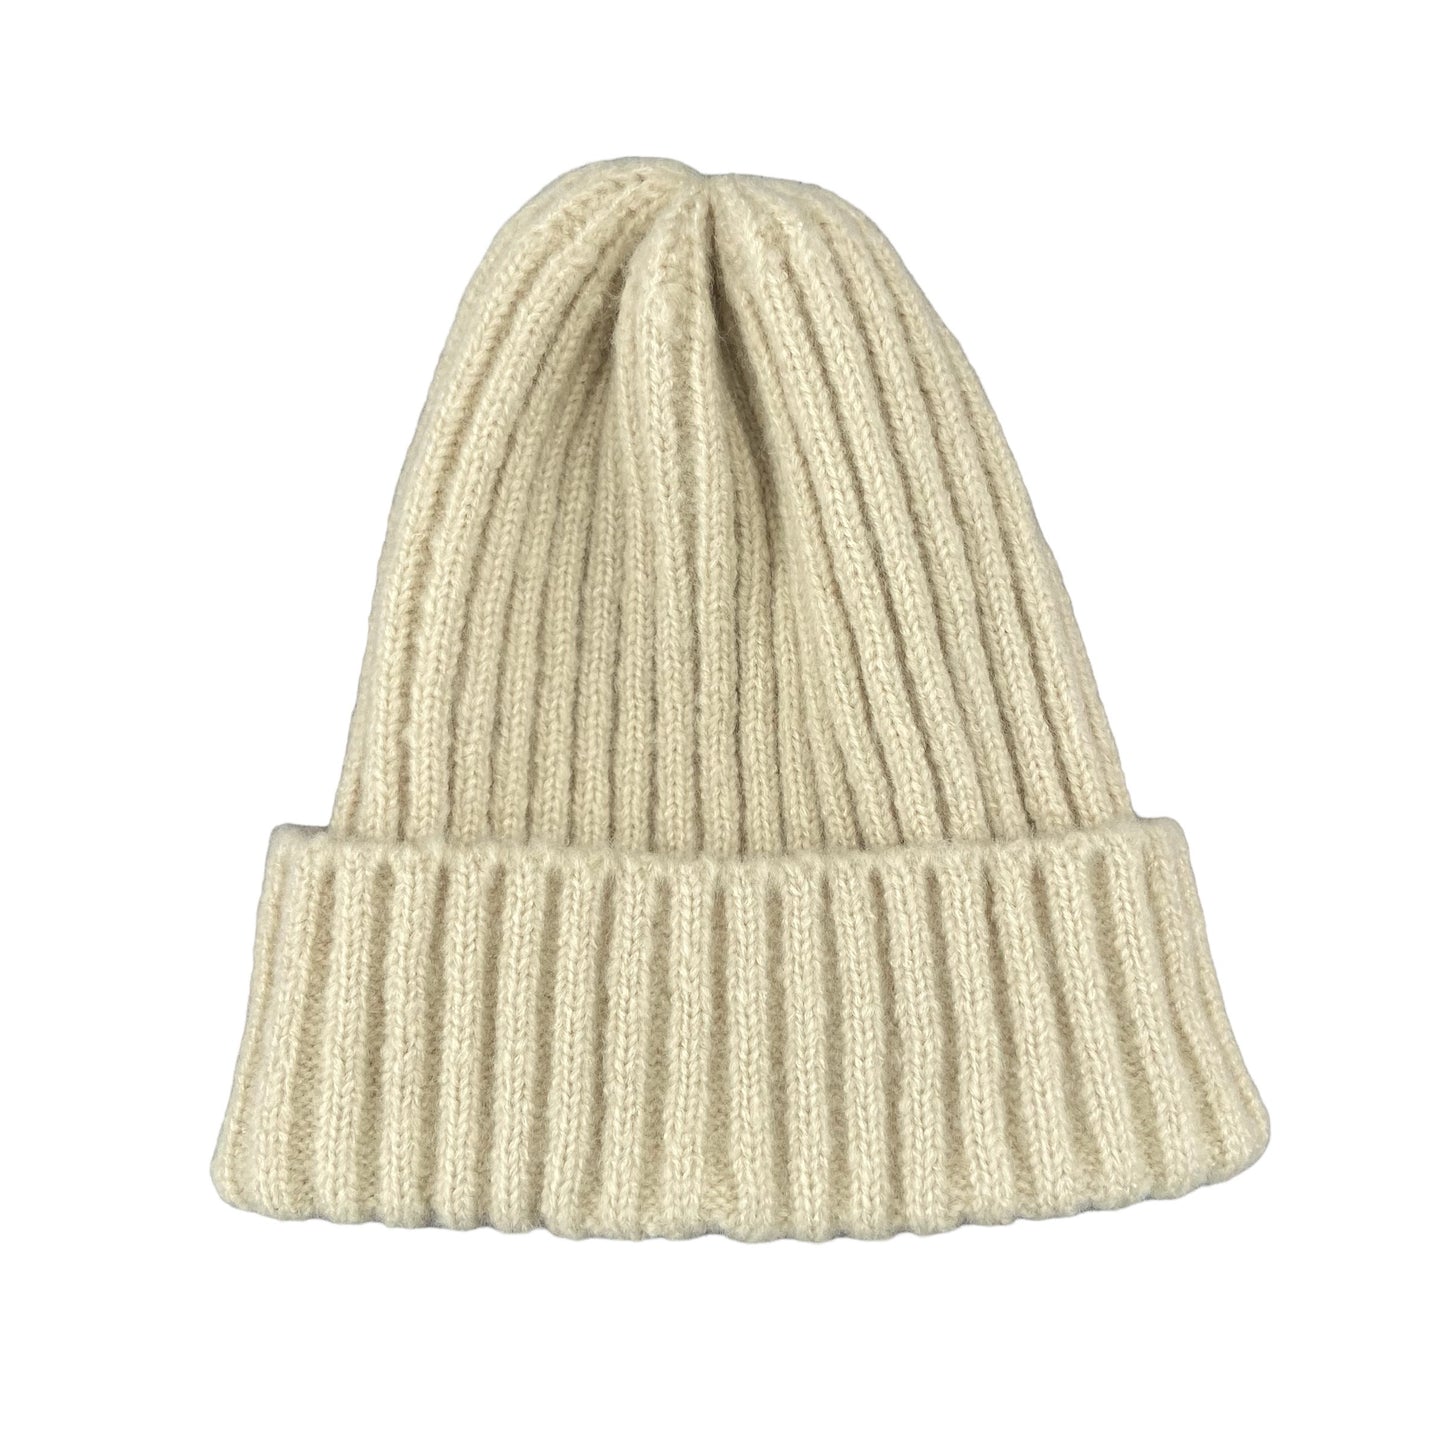 Wool Beanie Hats